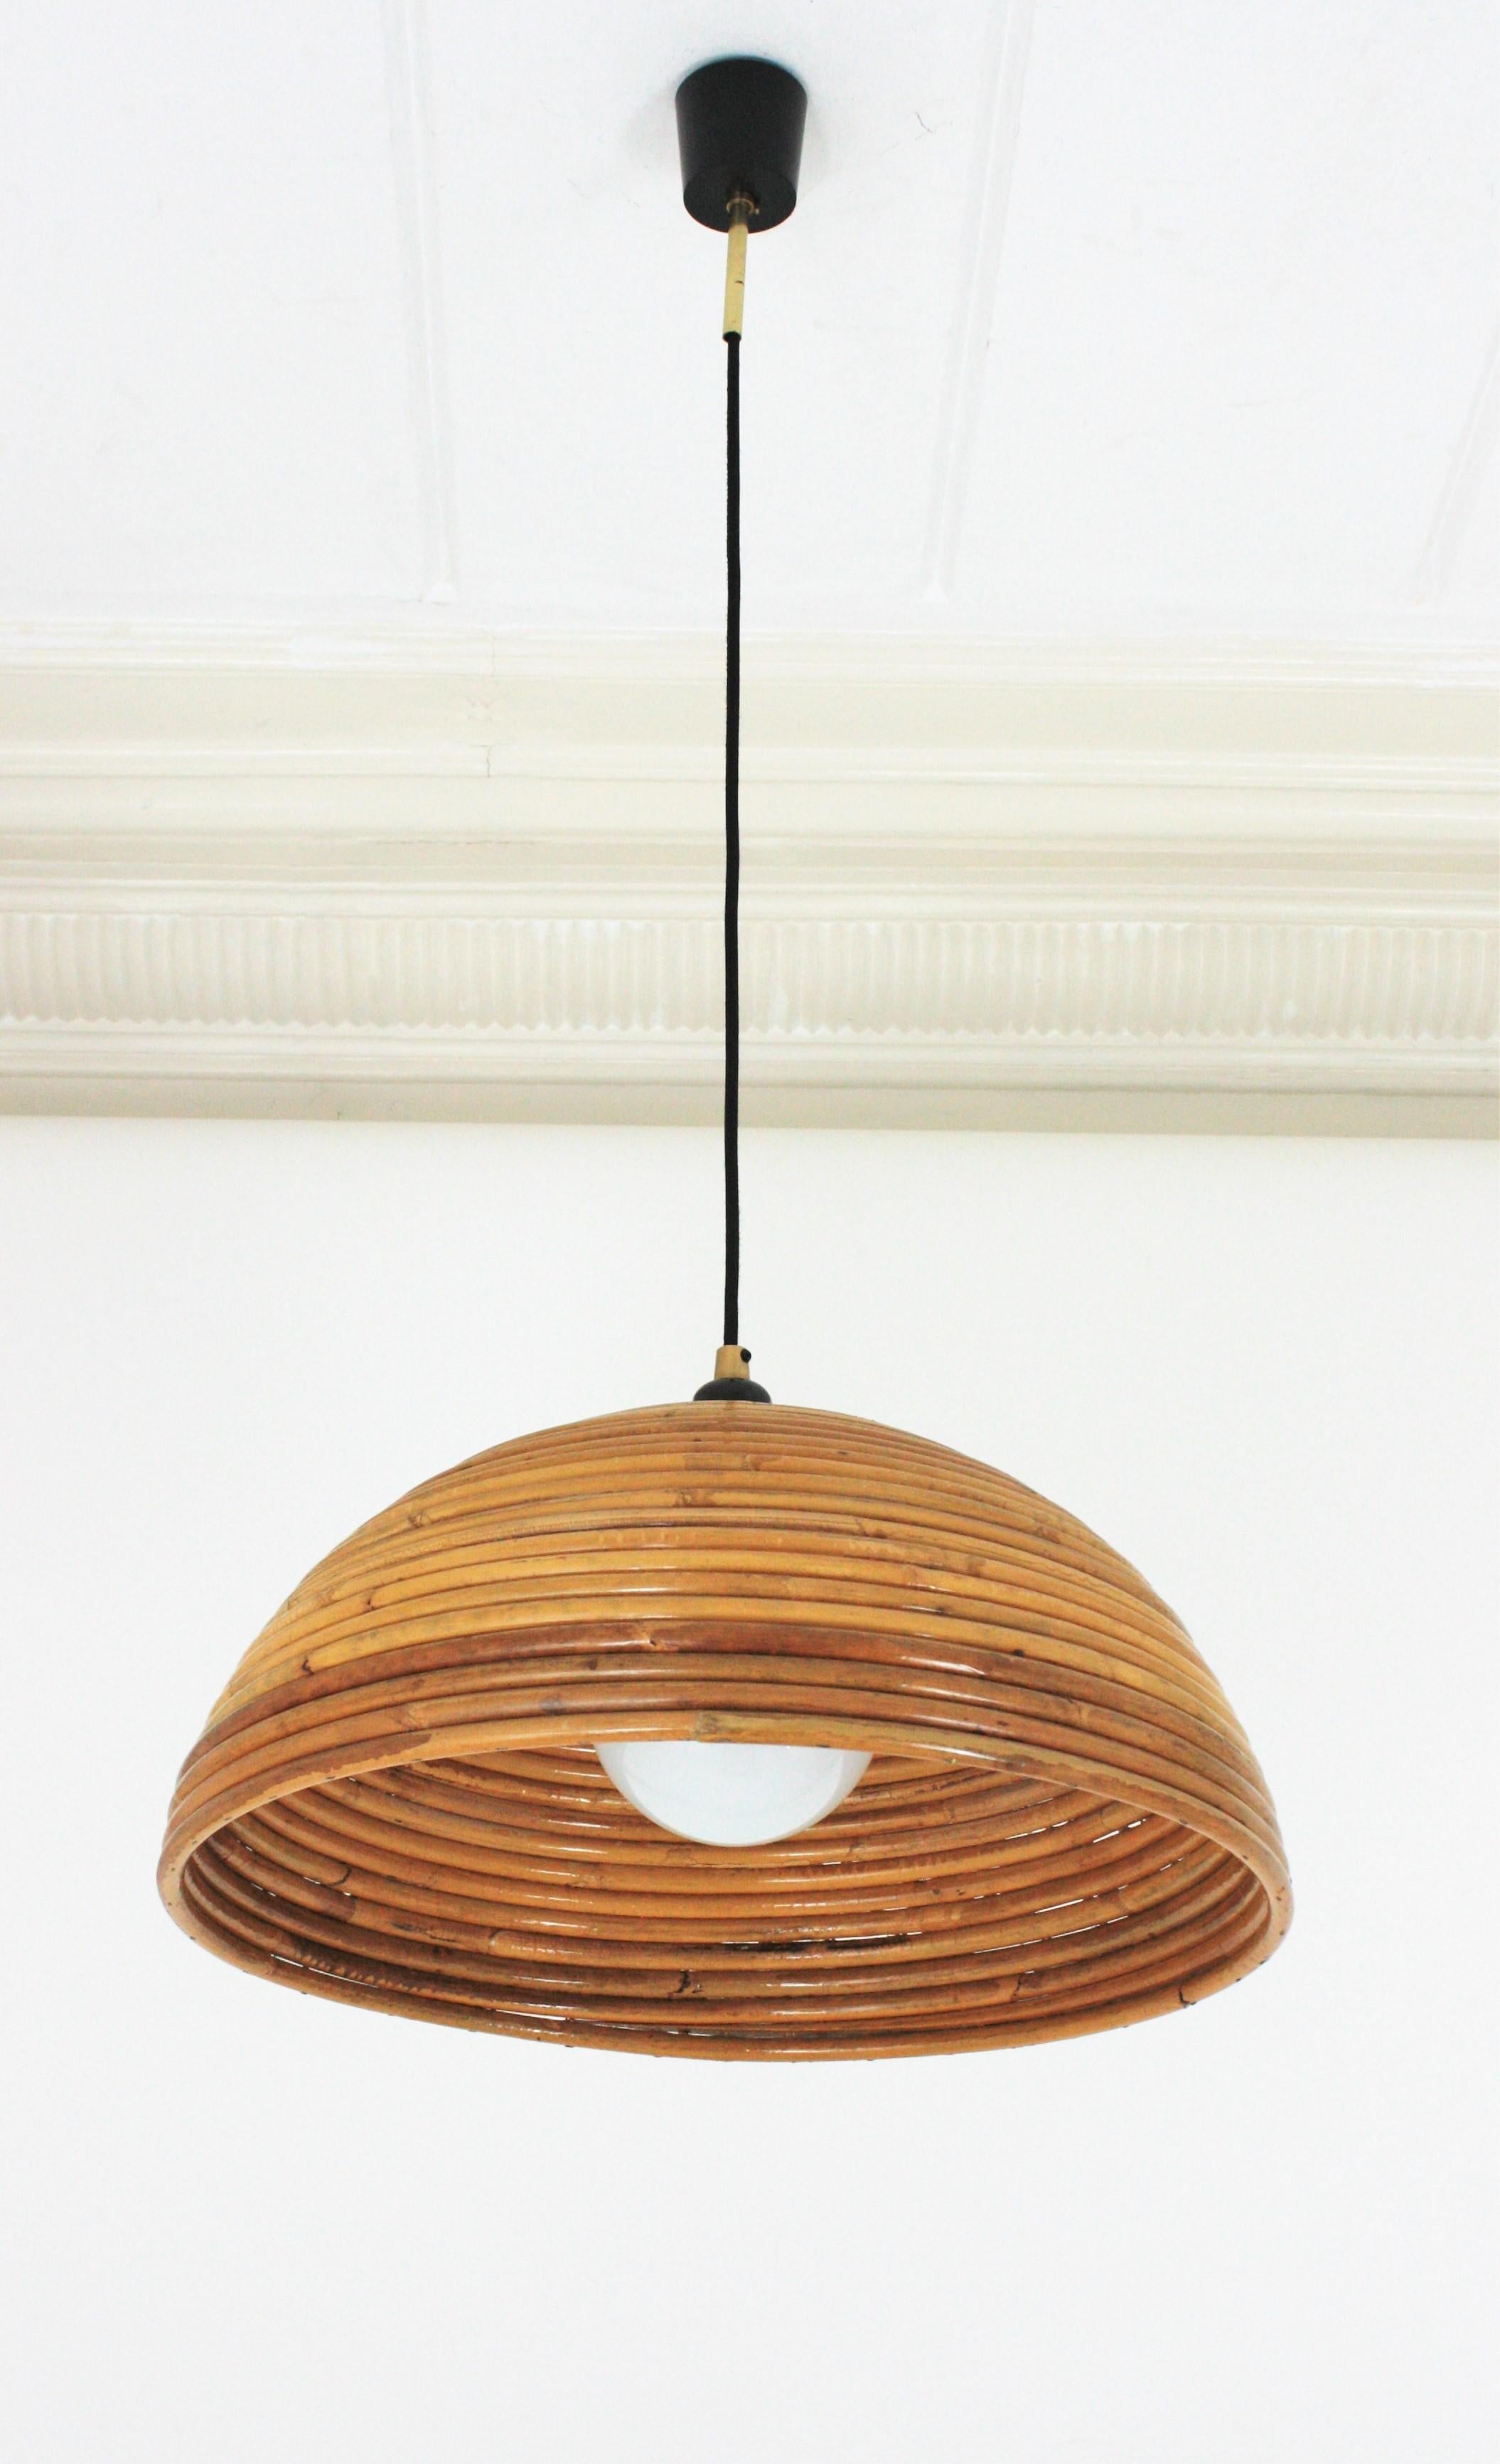 Italian Rattan Dome Shaped Pendant Hanging Light, Gabriella Crespi Style